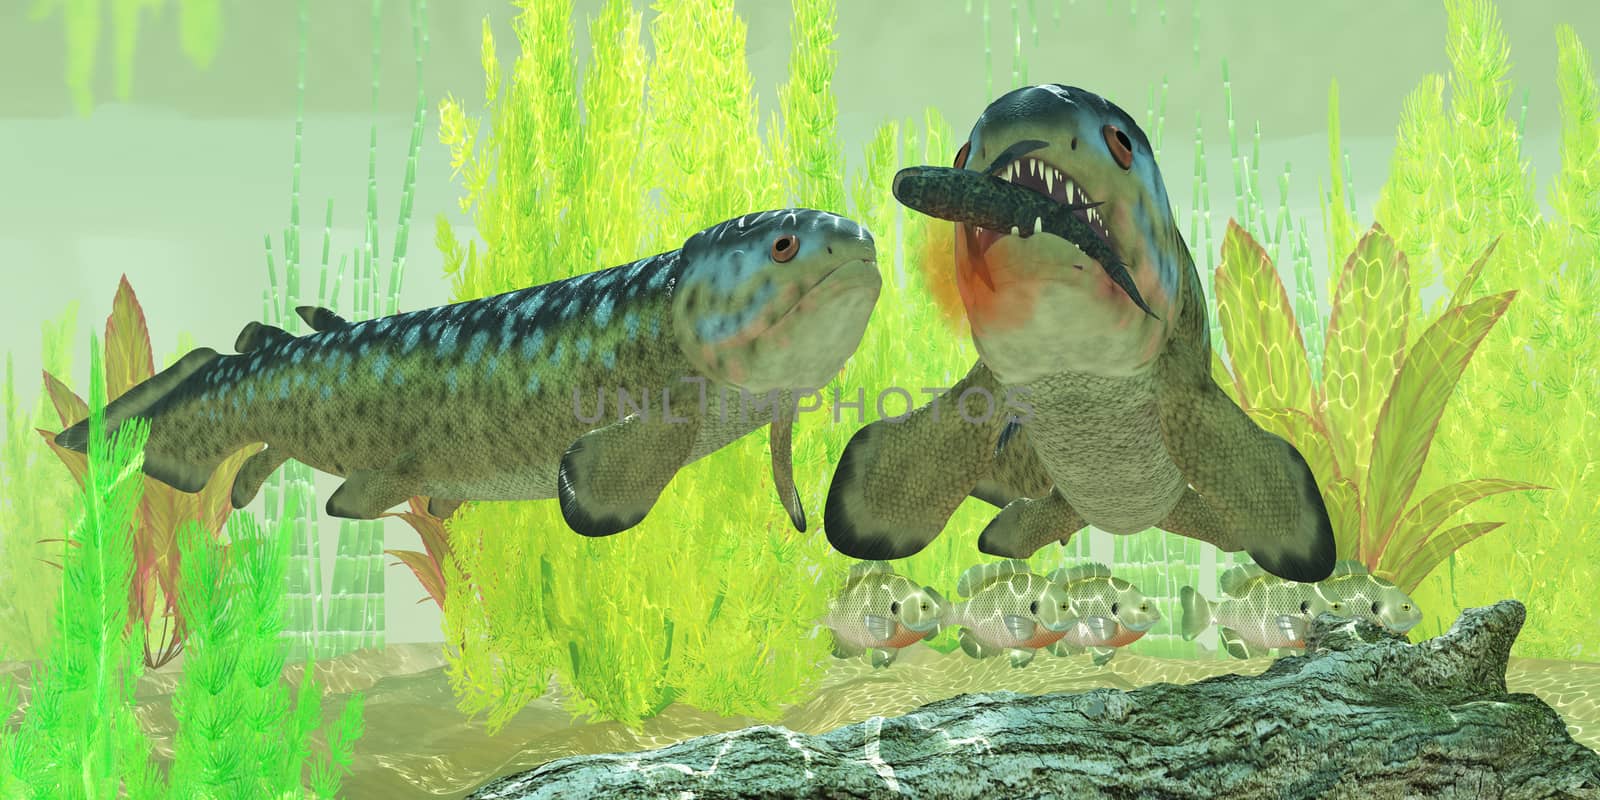 Rhizodus hibberti is an extinct group of Carboniferous predatory lobe-finned fish.